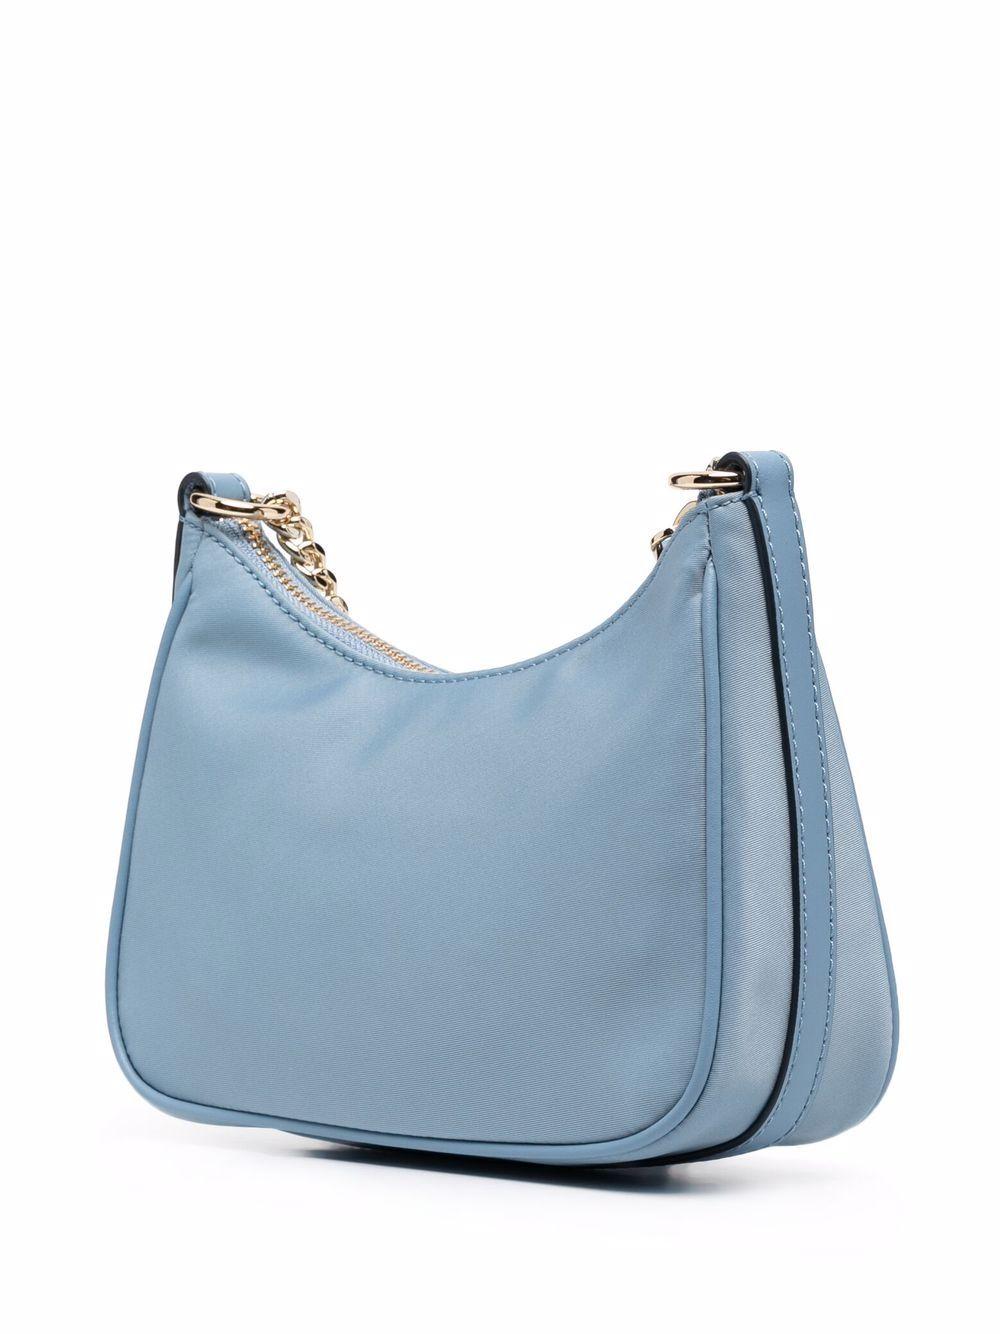 MICHAEL KORS Bag Blue Camille Leather Satchel Tote Handbag RP 360 IN BOX   eBay